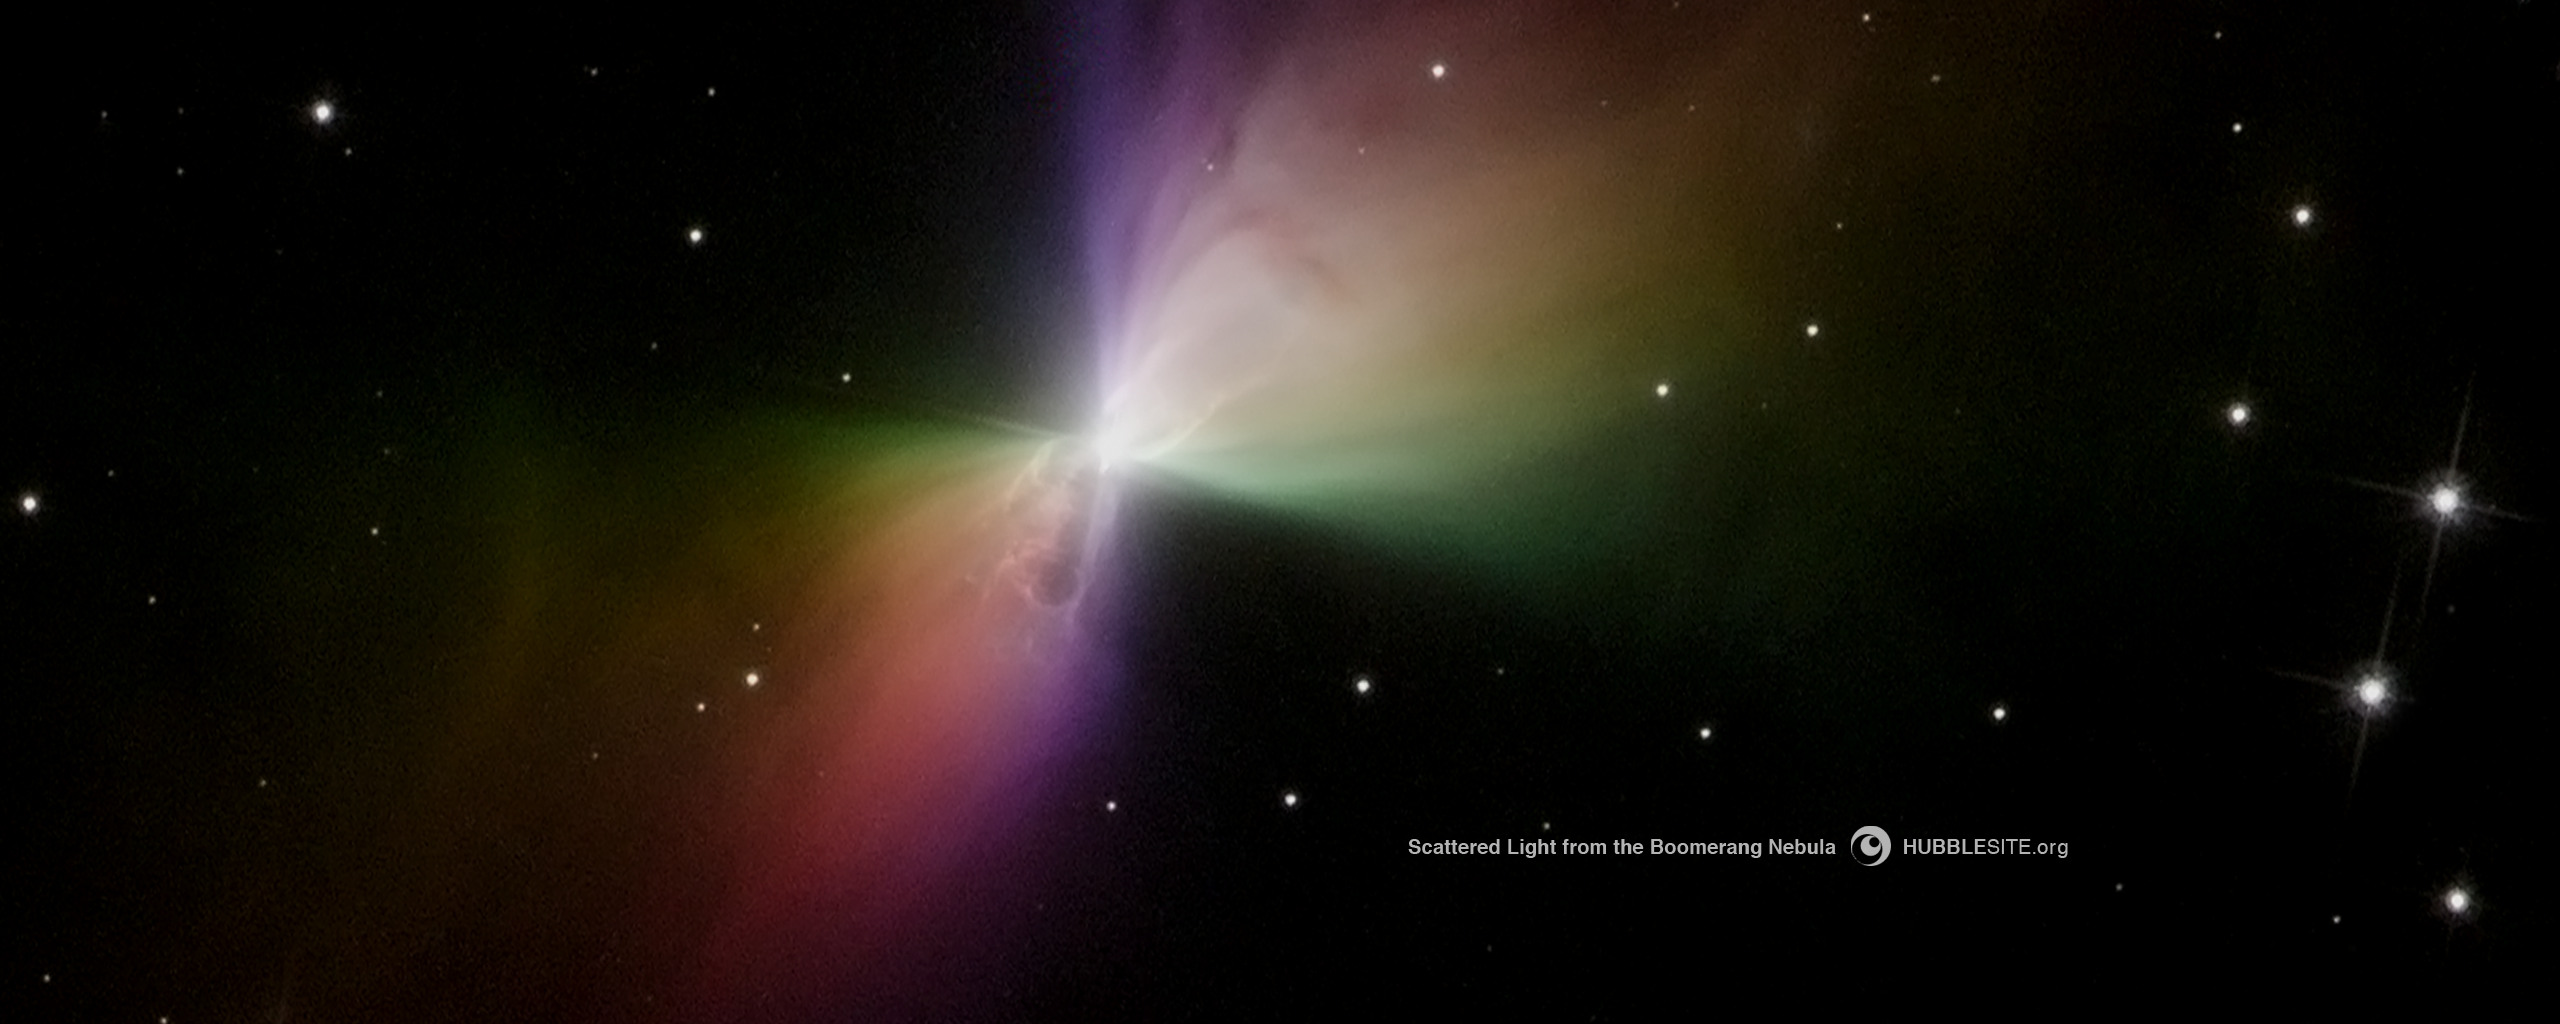 Scattered Light From The Boomerang Nebula Imgsrc